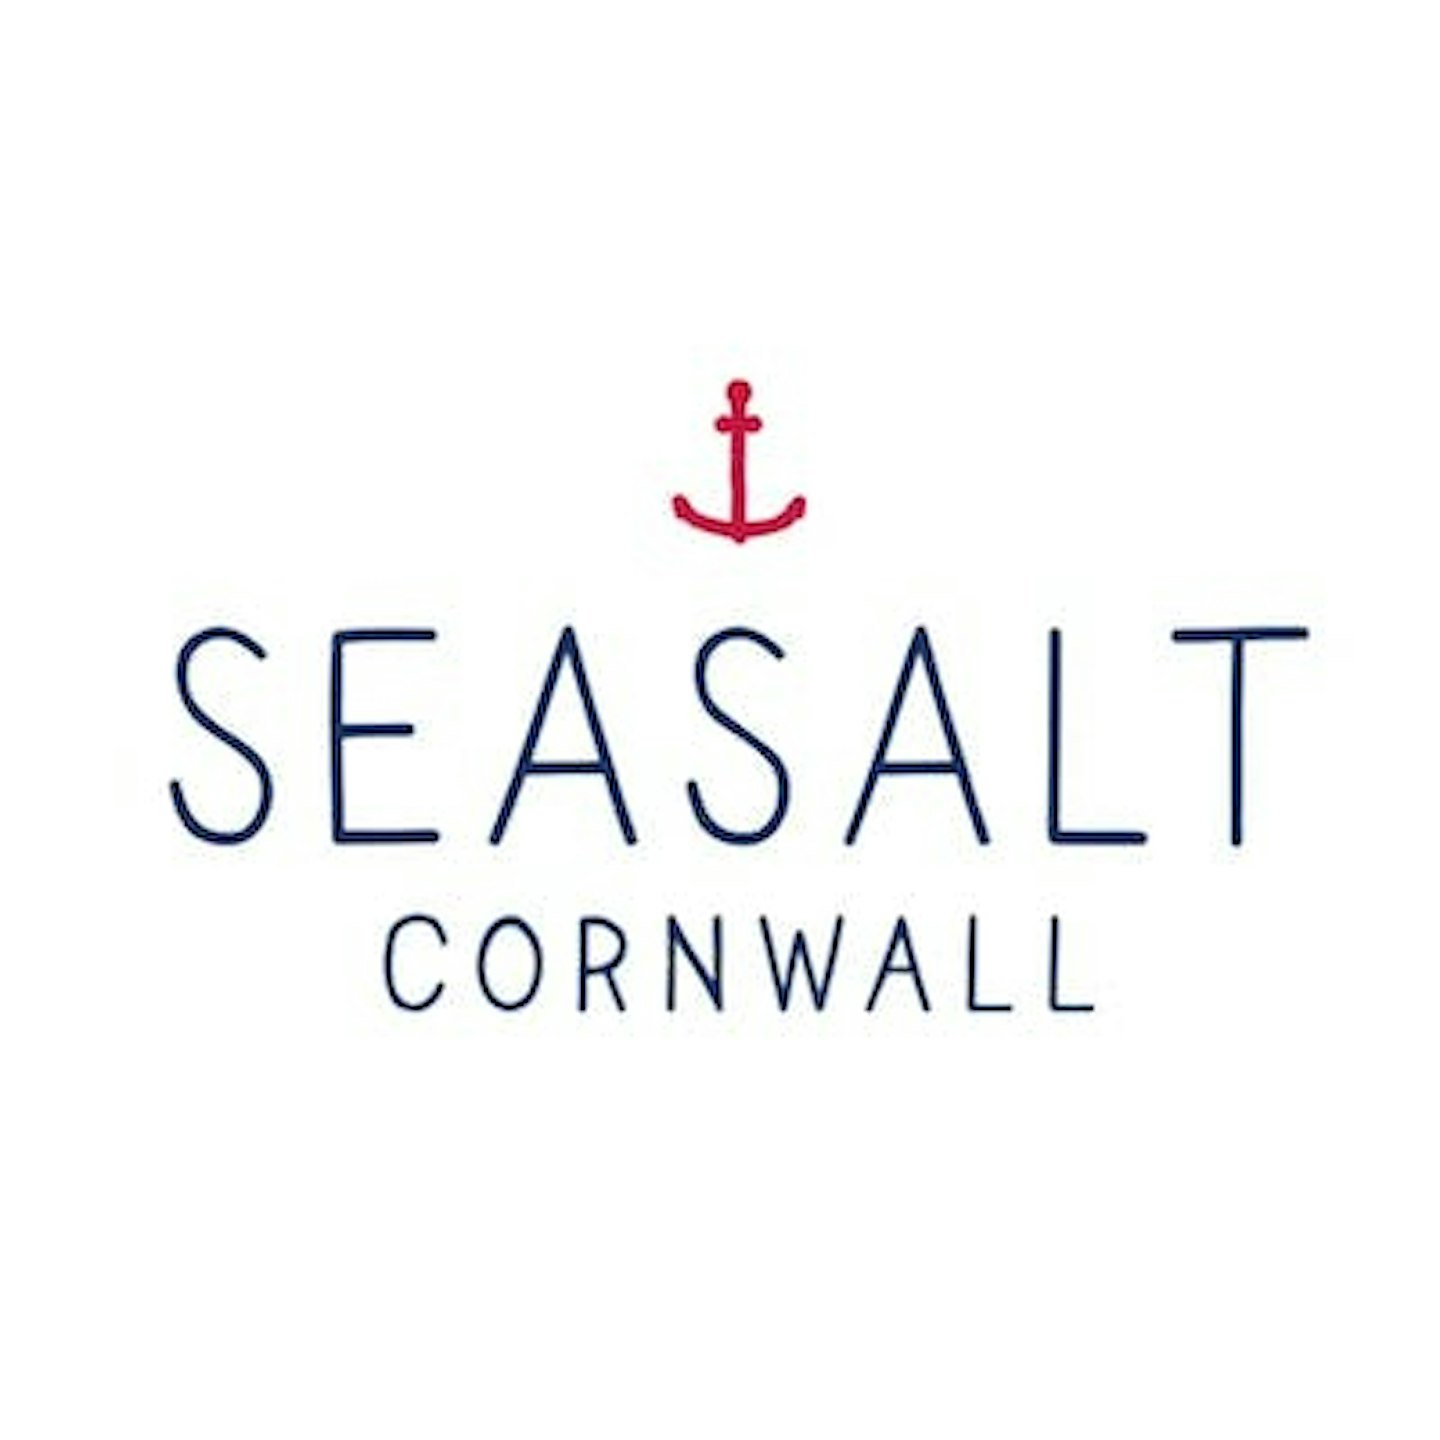 seasalt-cornwall-logo-1